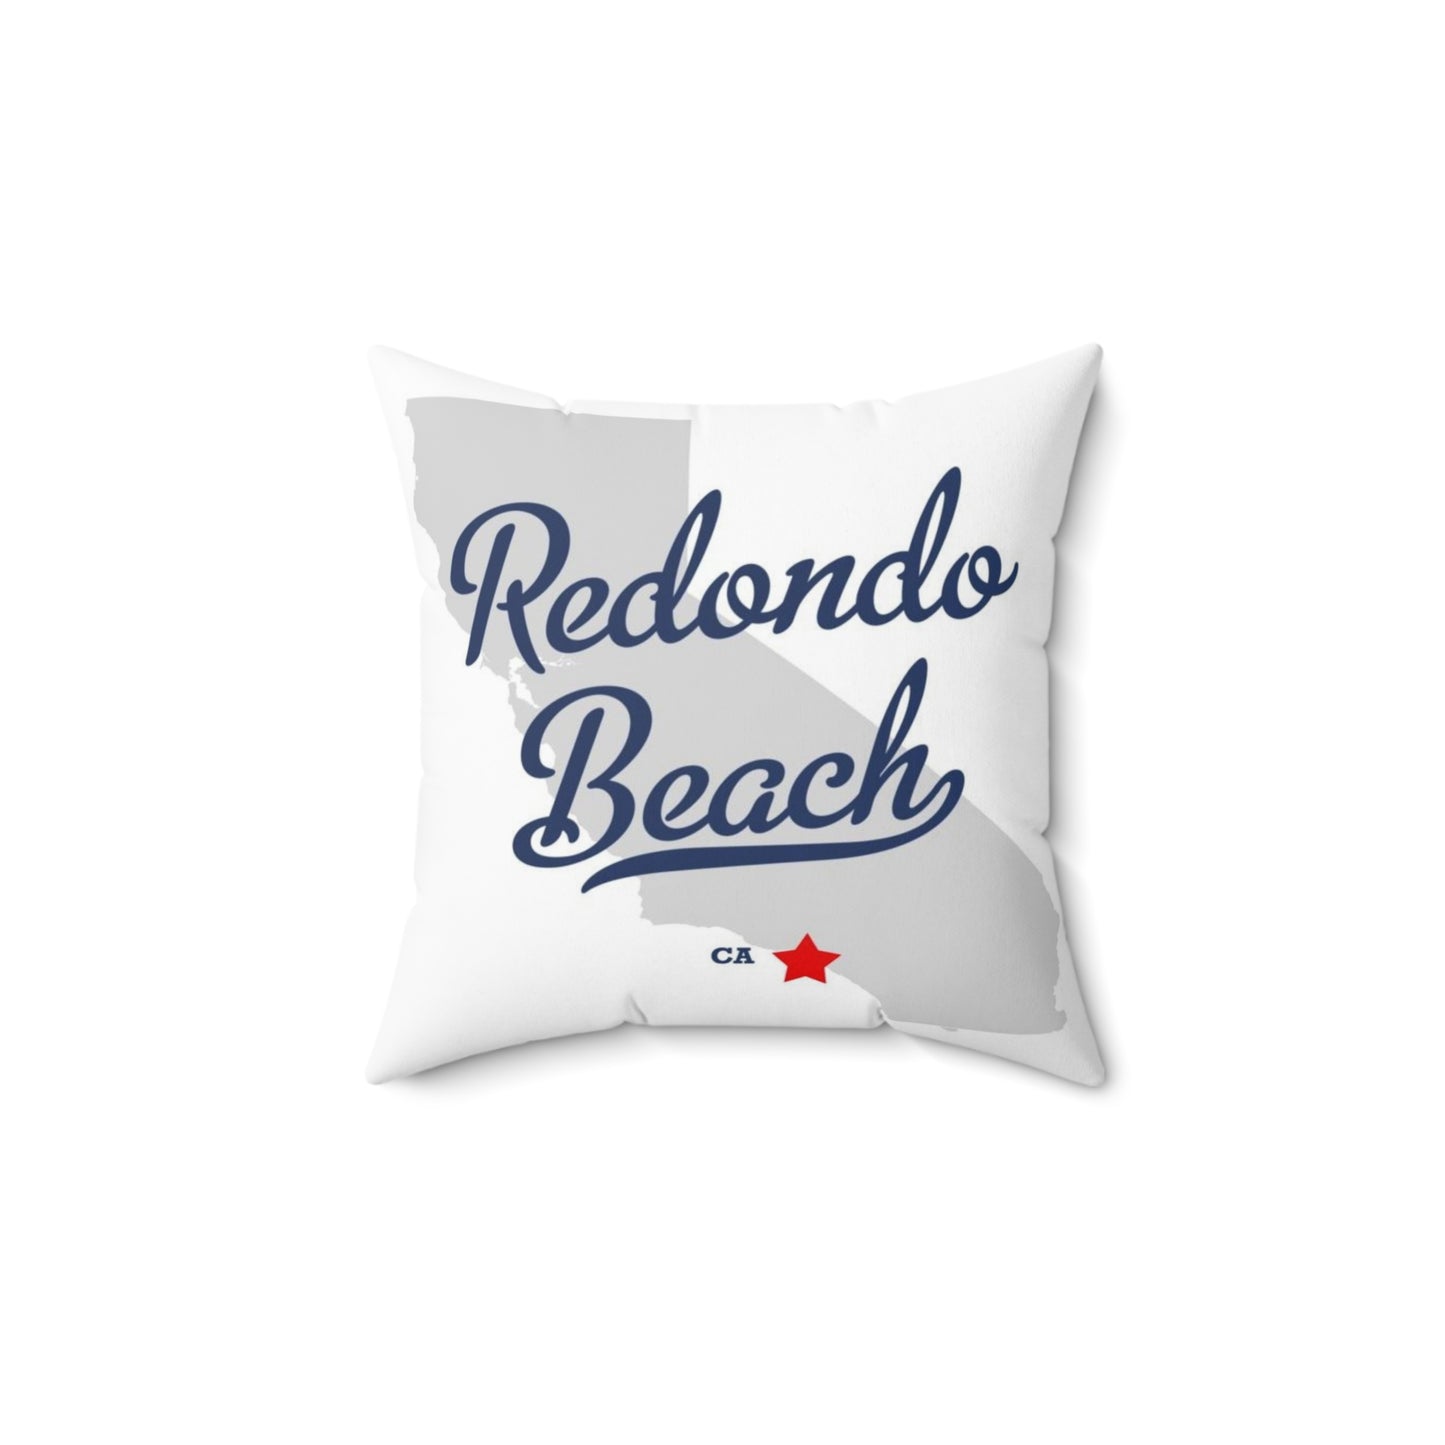 Redondo Beach California Map - Faux Suede Square Pillow